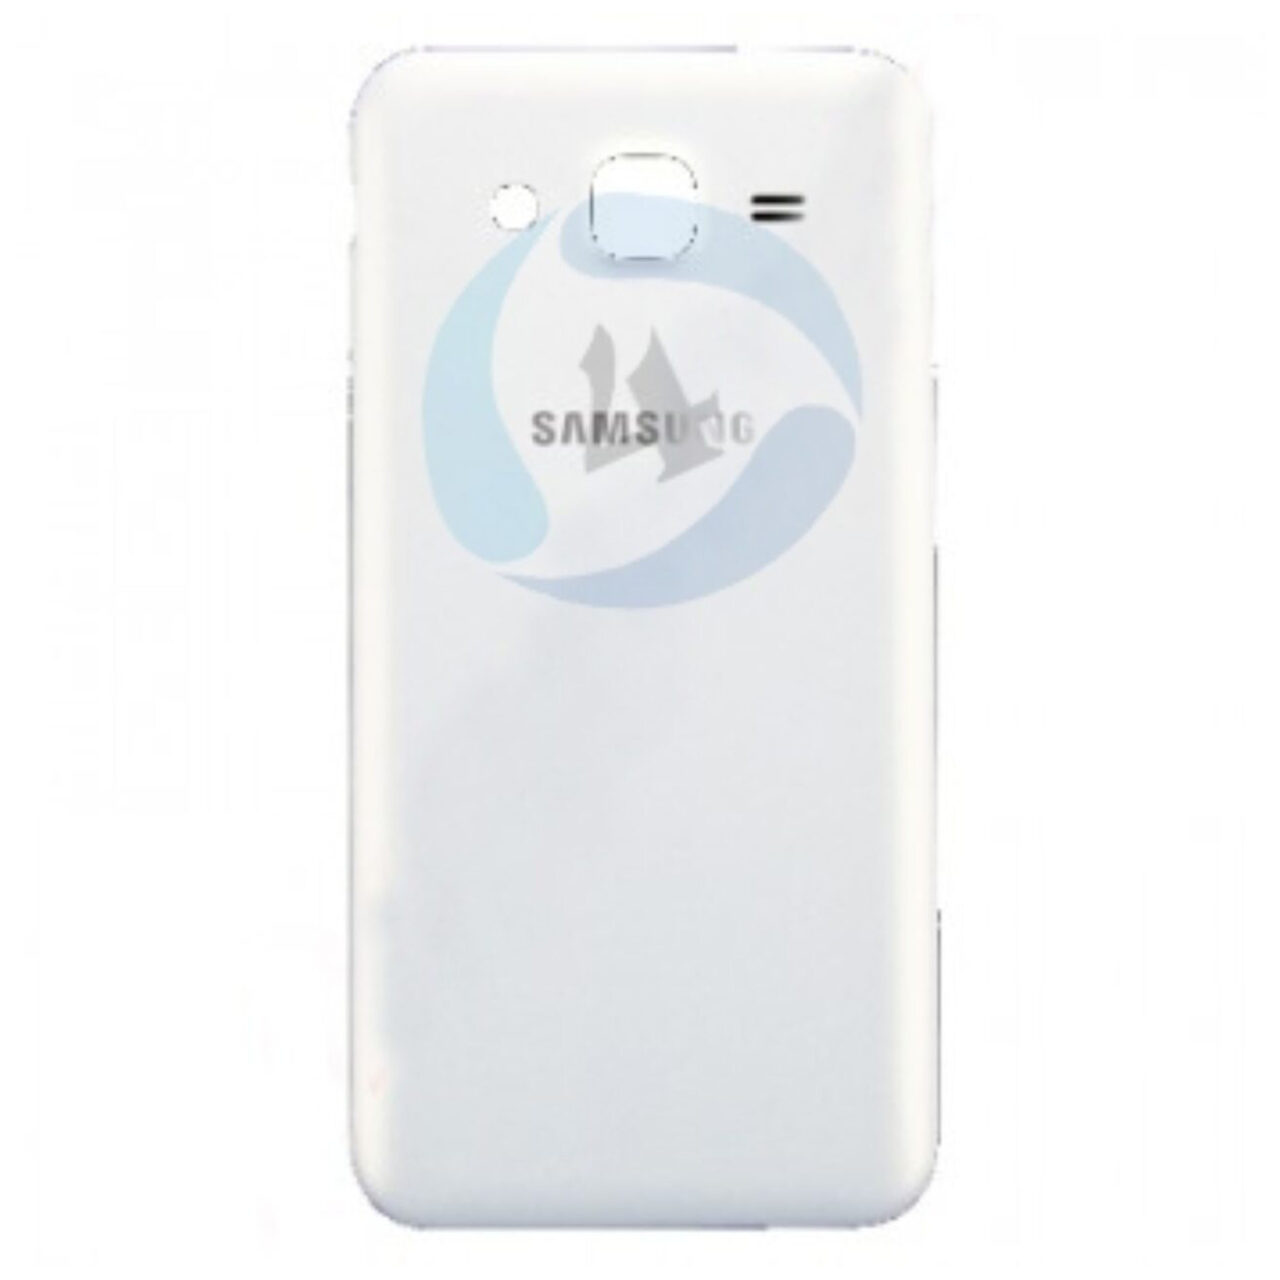 Samsung Galaxy J7 SM J700 F Backcover batterij cover white